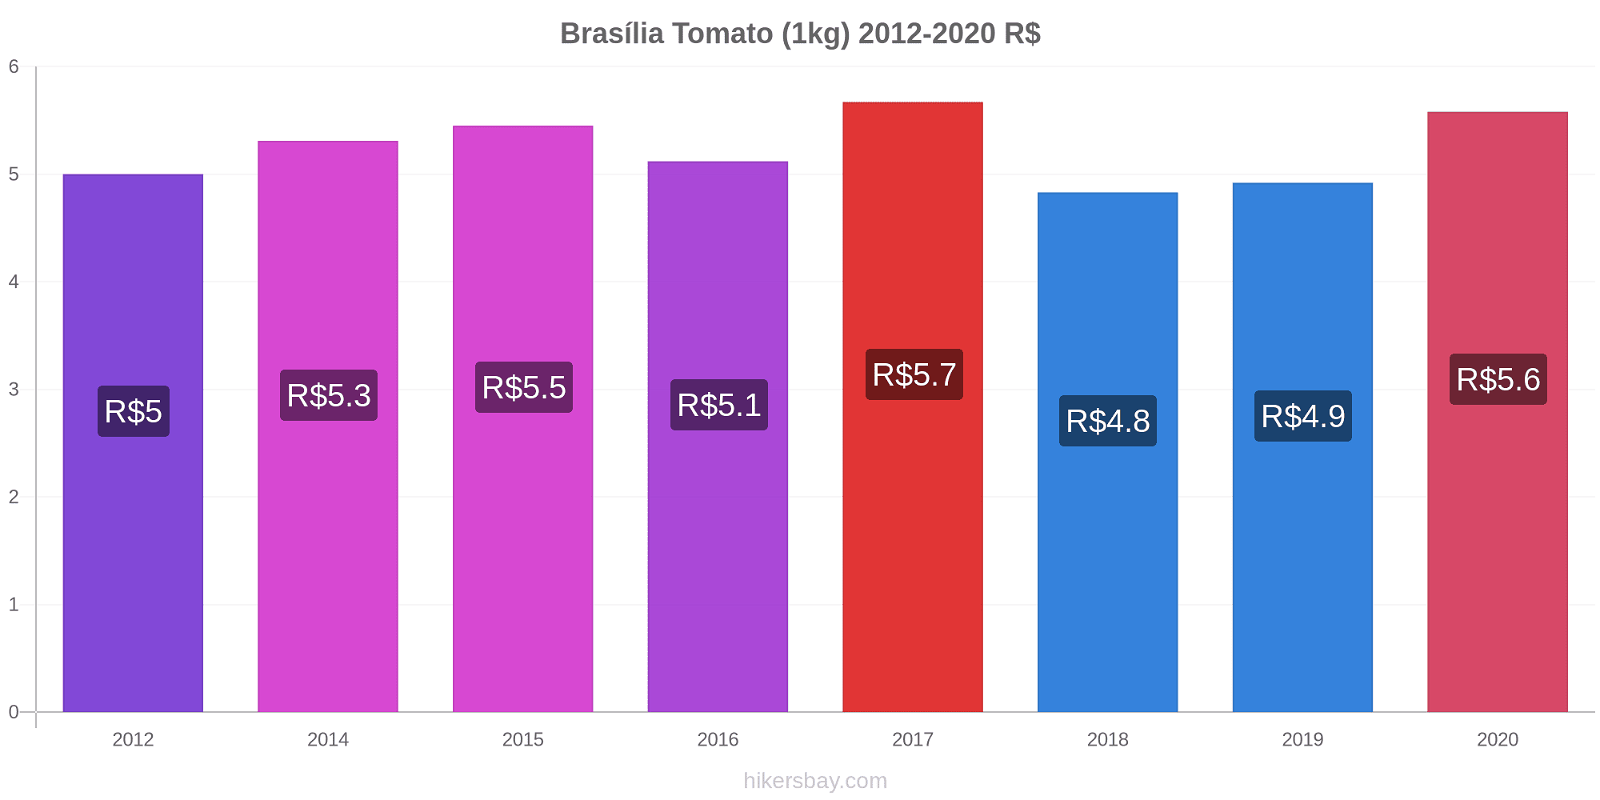 Brasília price changes Tomato (1kg) hikersbay.com